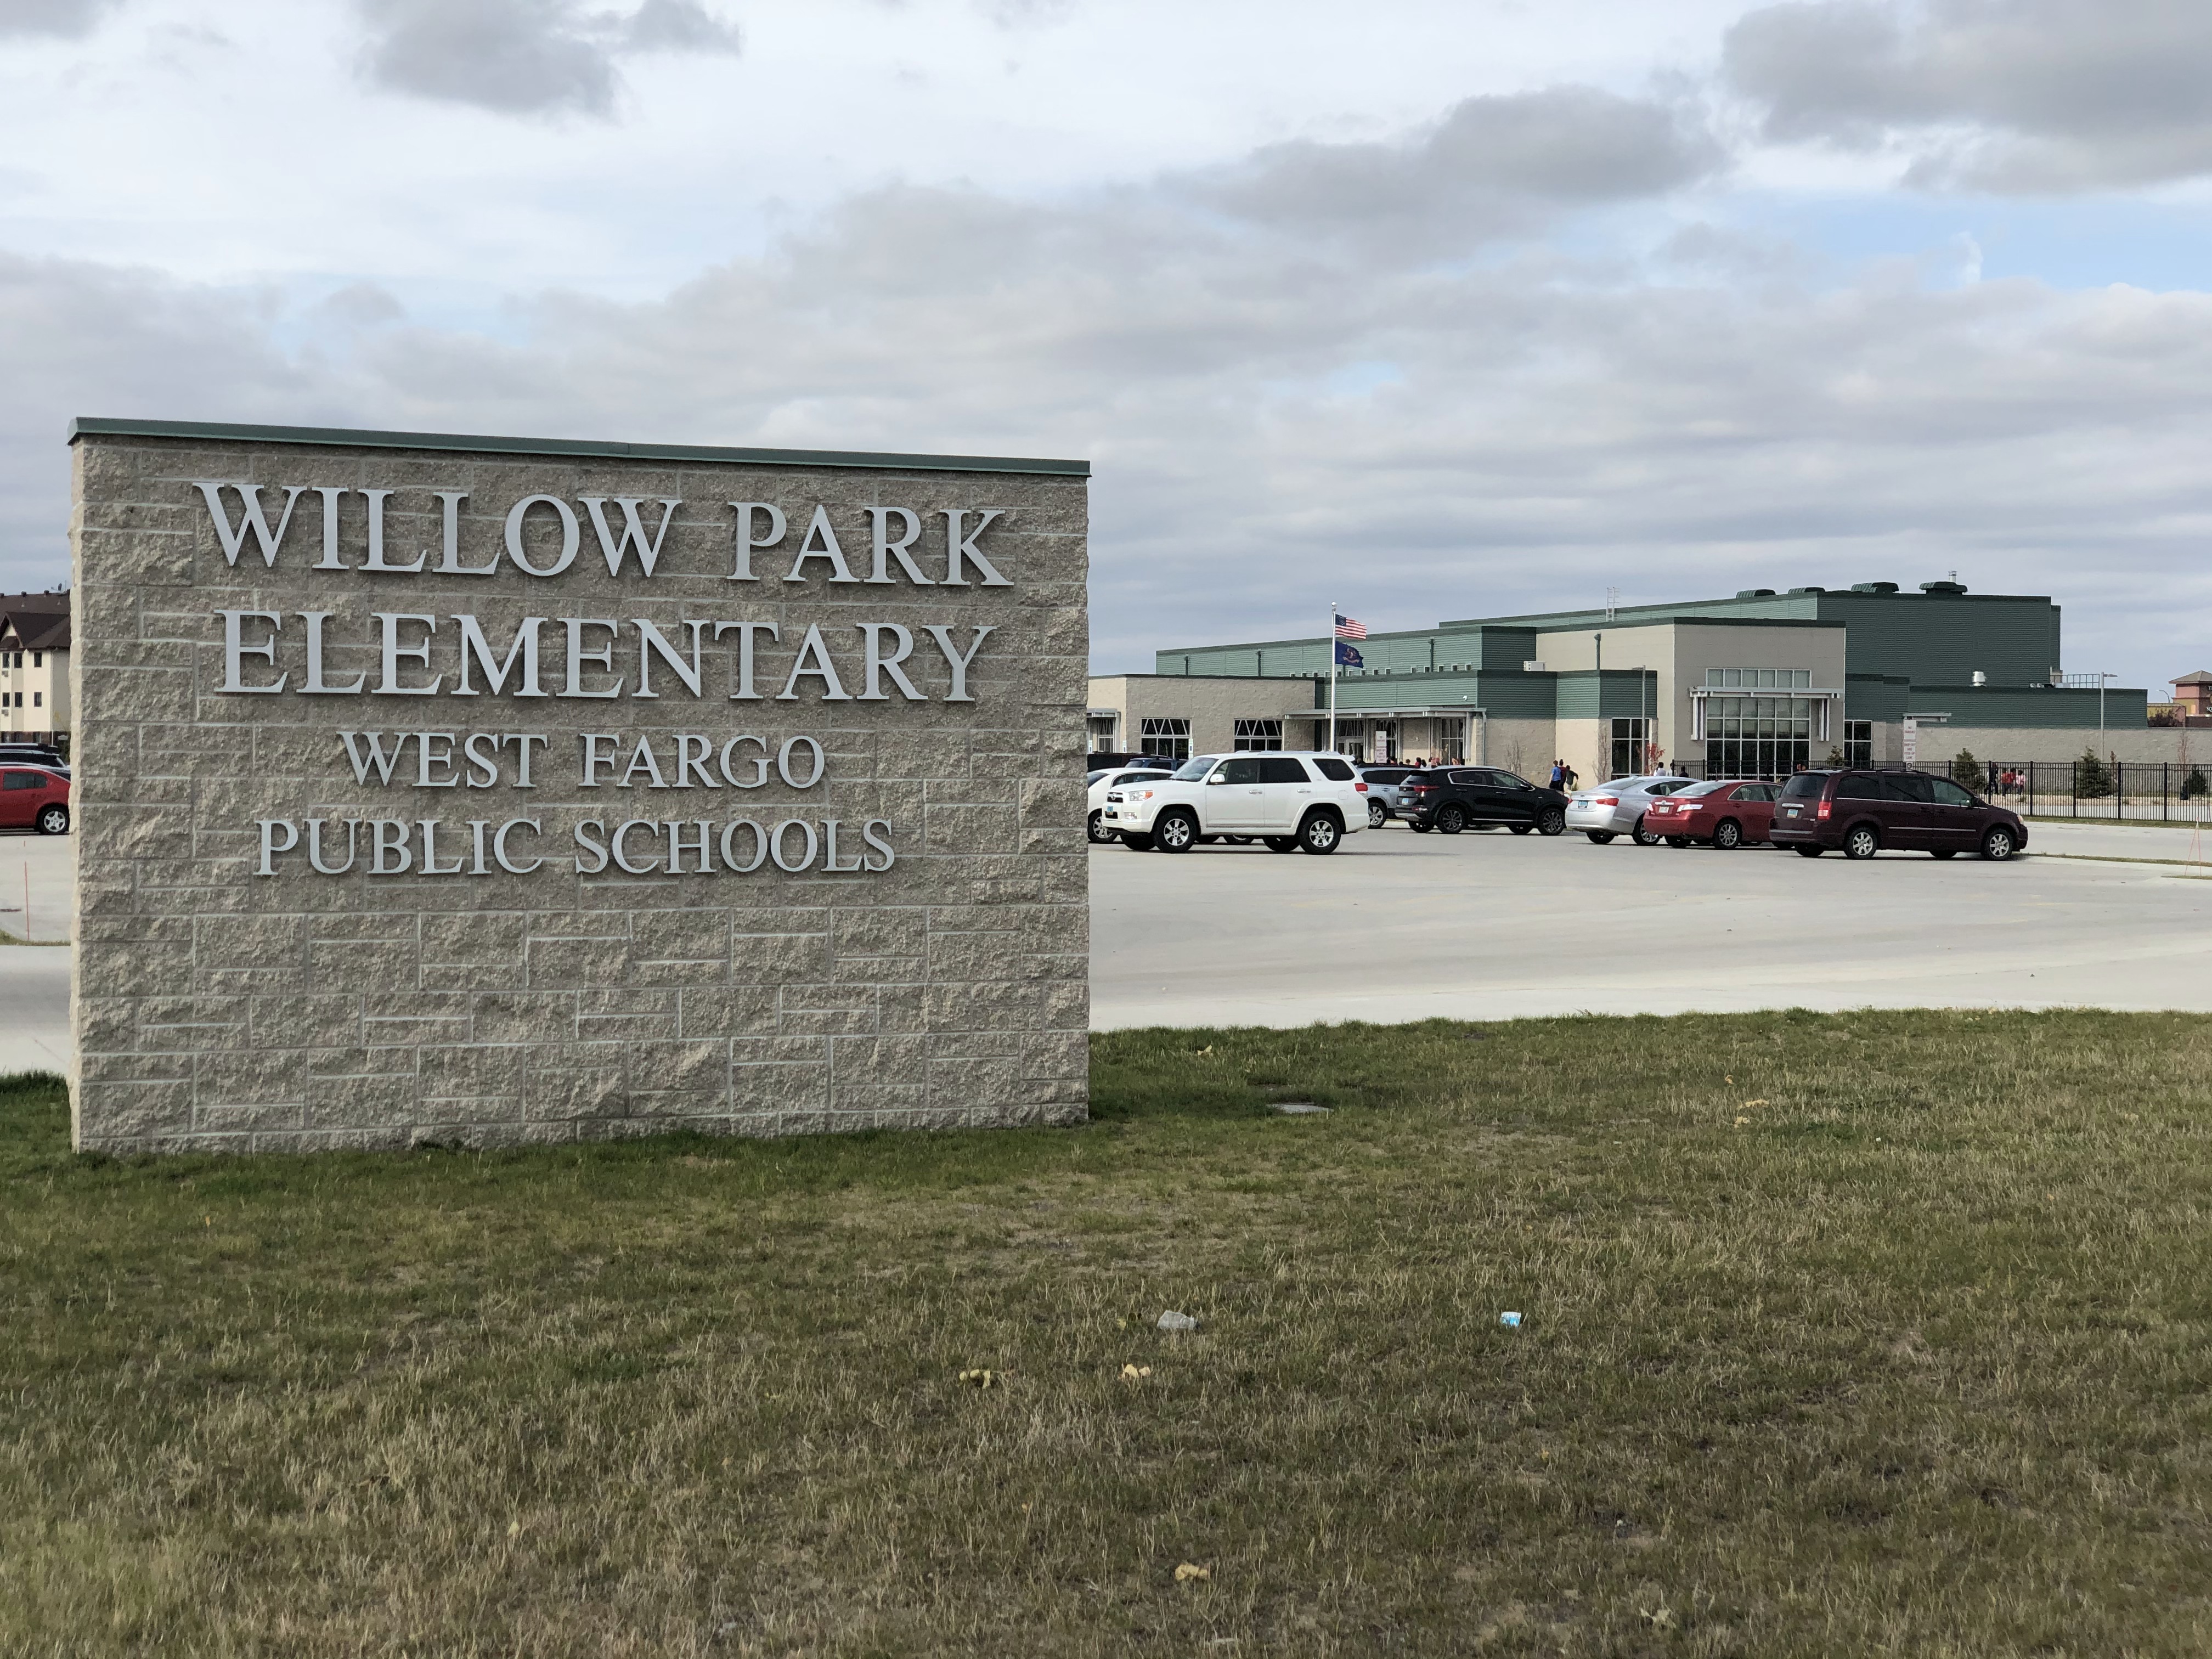 Willow Park Elementary School